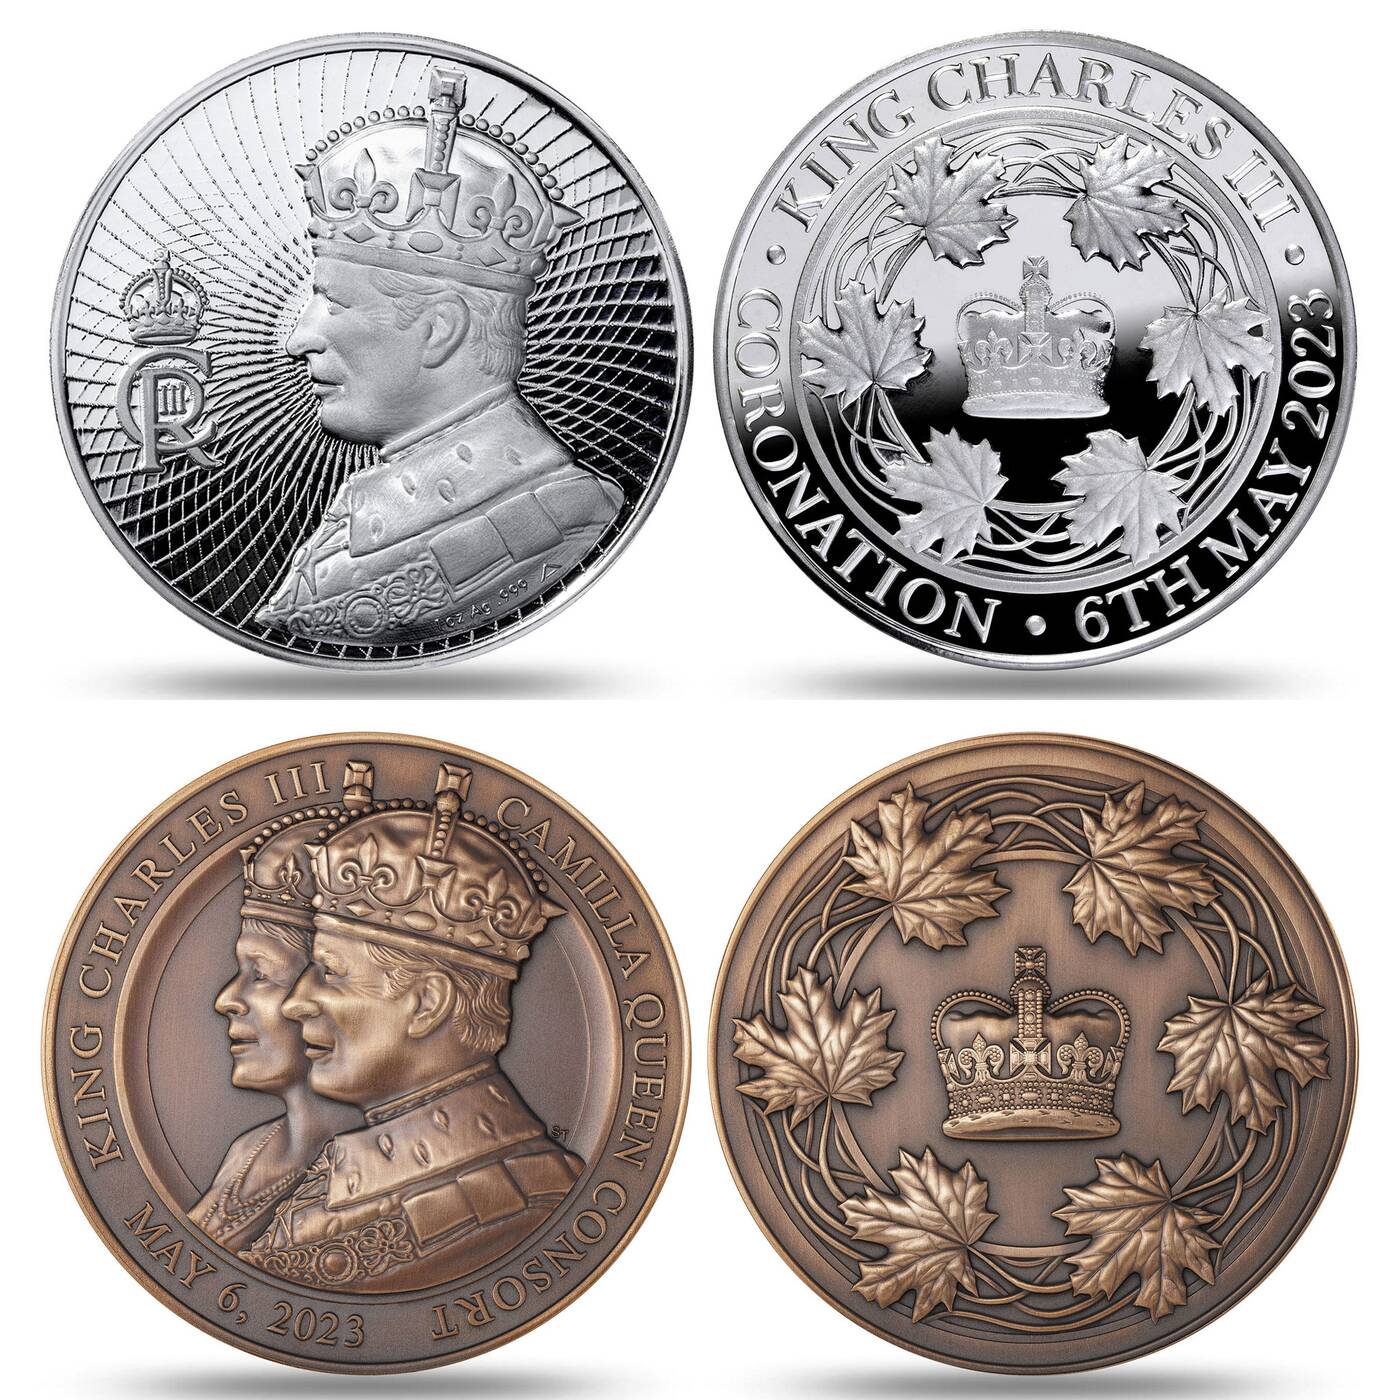 COPPER COINS - Canada Coins